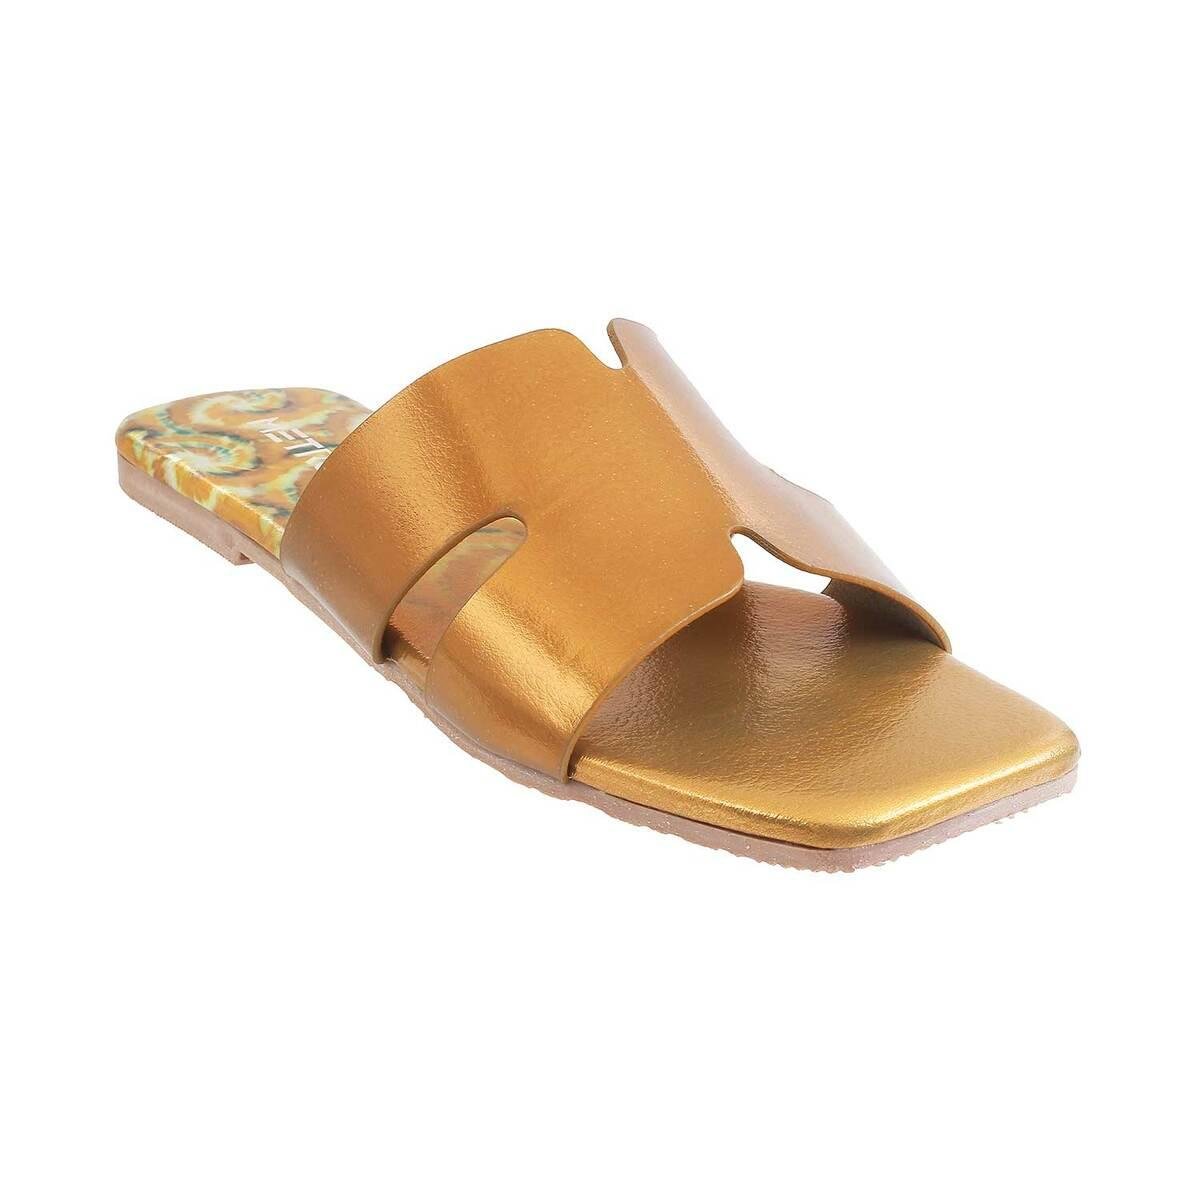 Buy online Mochi Women's Antic Gold Fashion Sandals-3 Uk/india (36